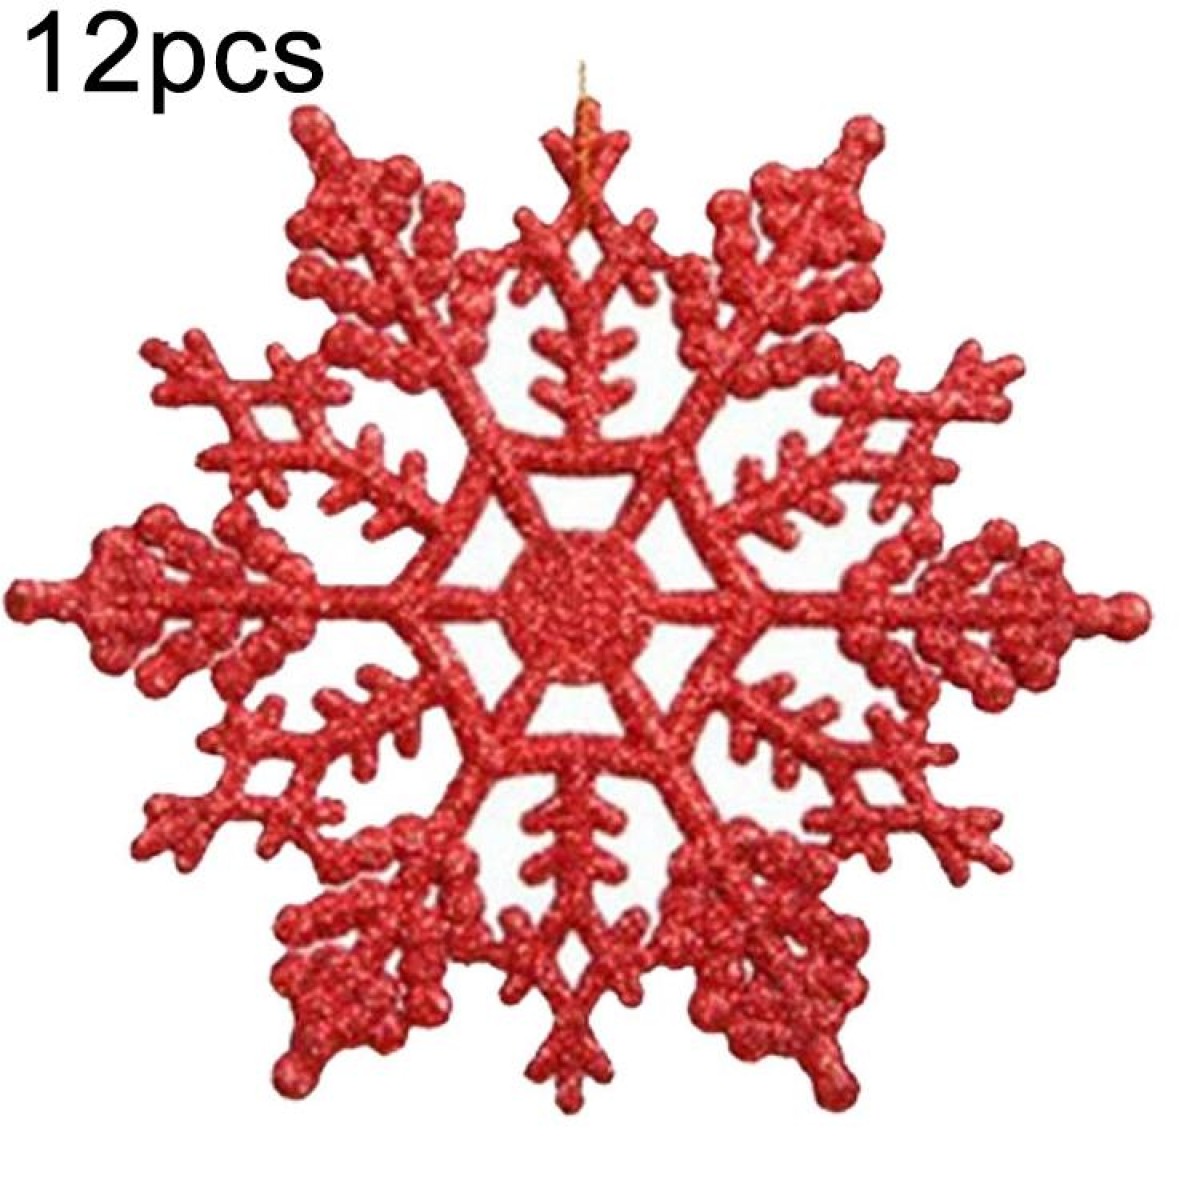 12 PCS Christmas Tree Ornaments Acrylic Snowflake Pieces Decorative Pendant Loose Powder, Diameter: 10cm(Red)